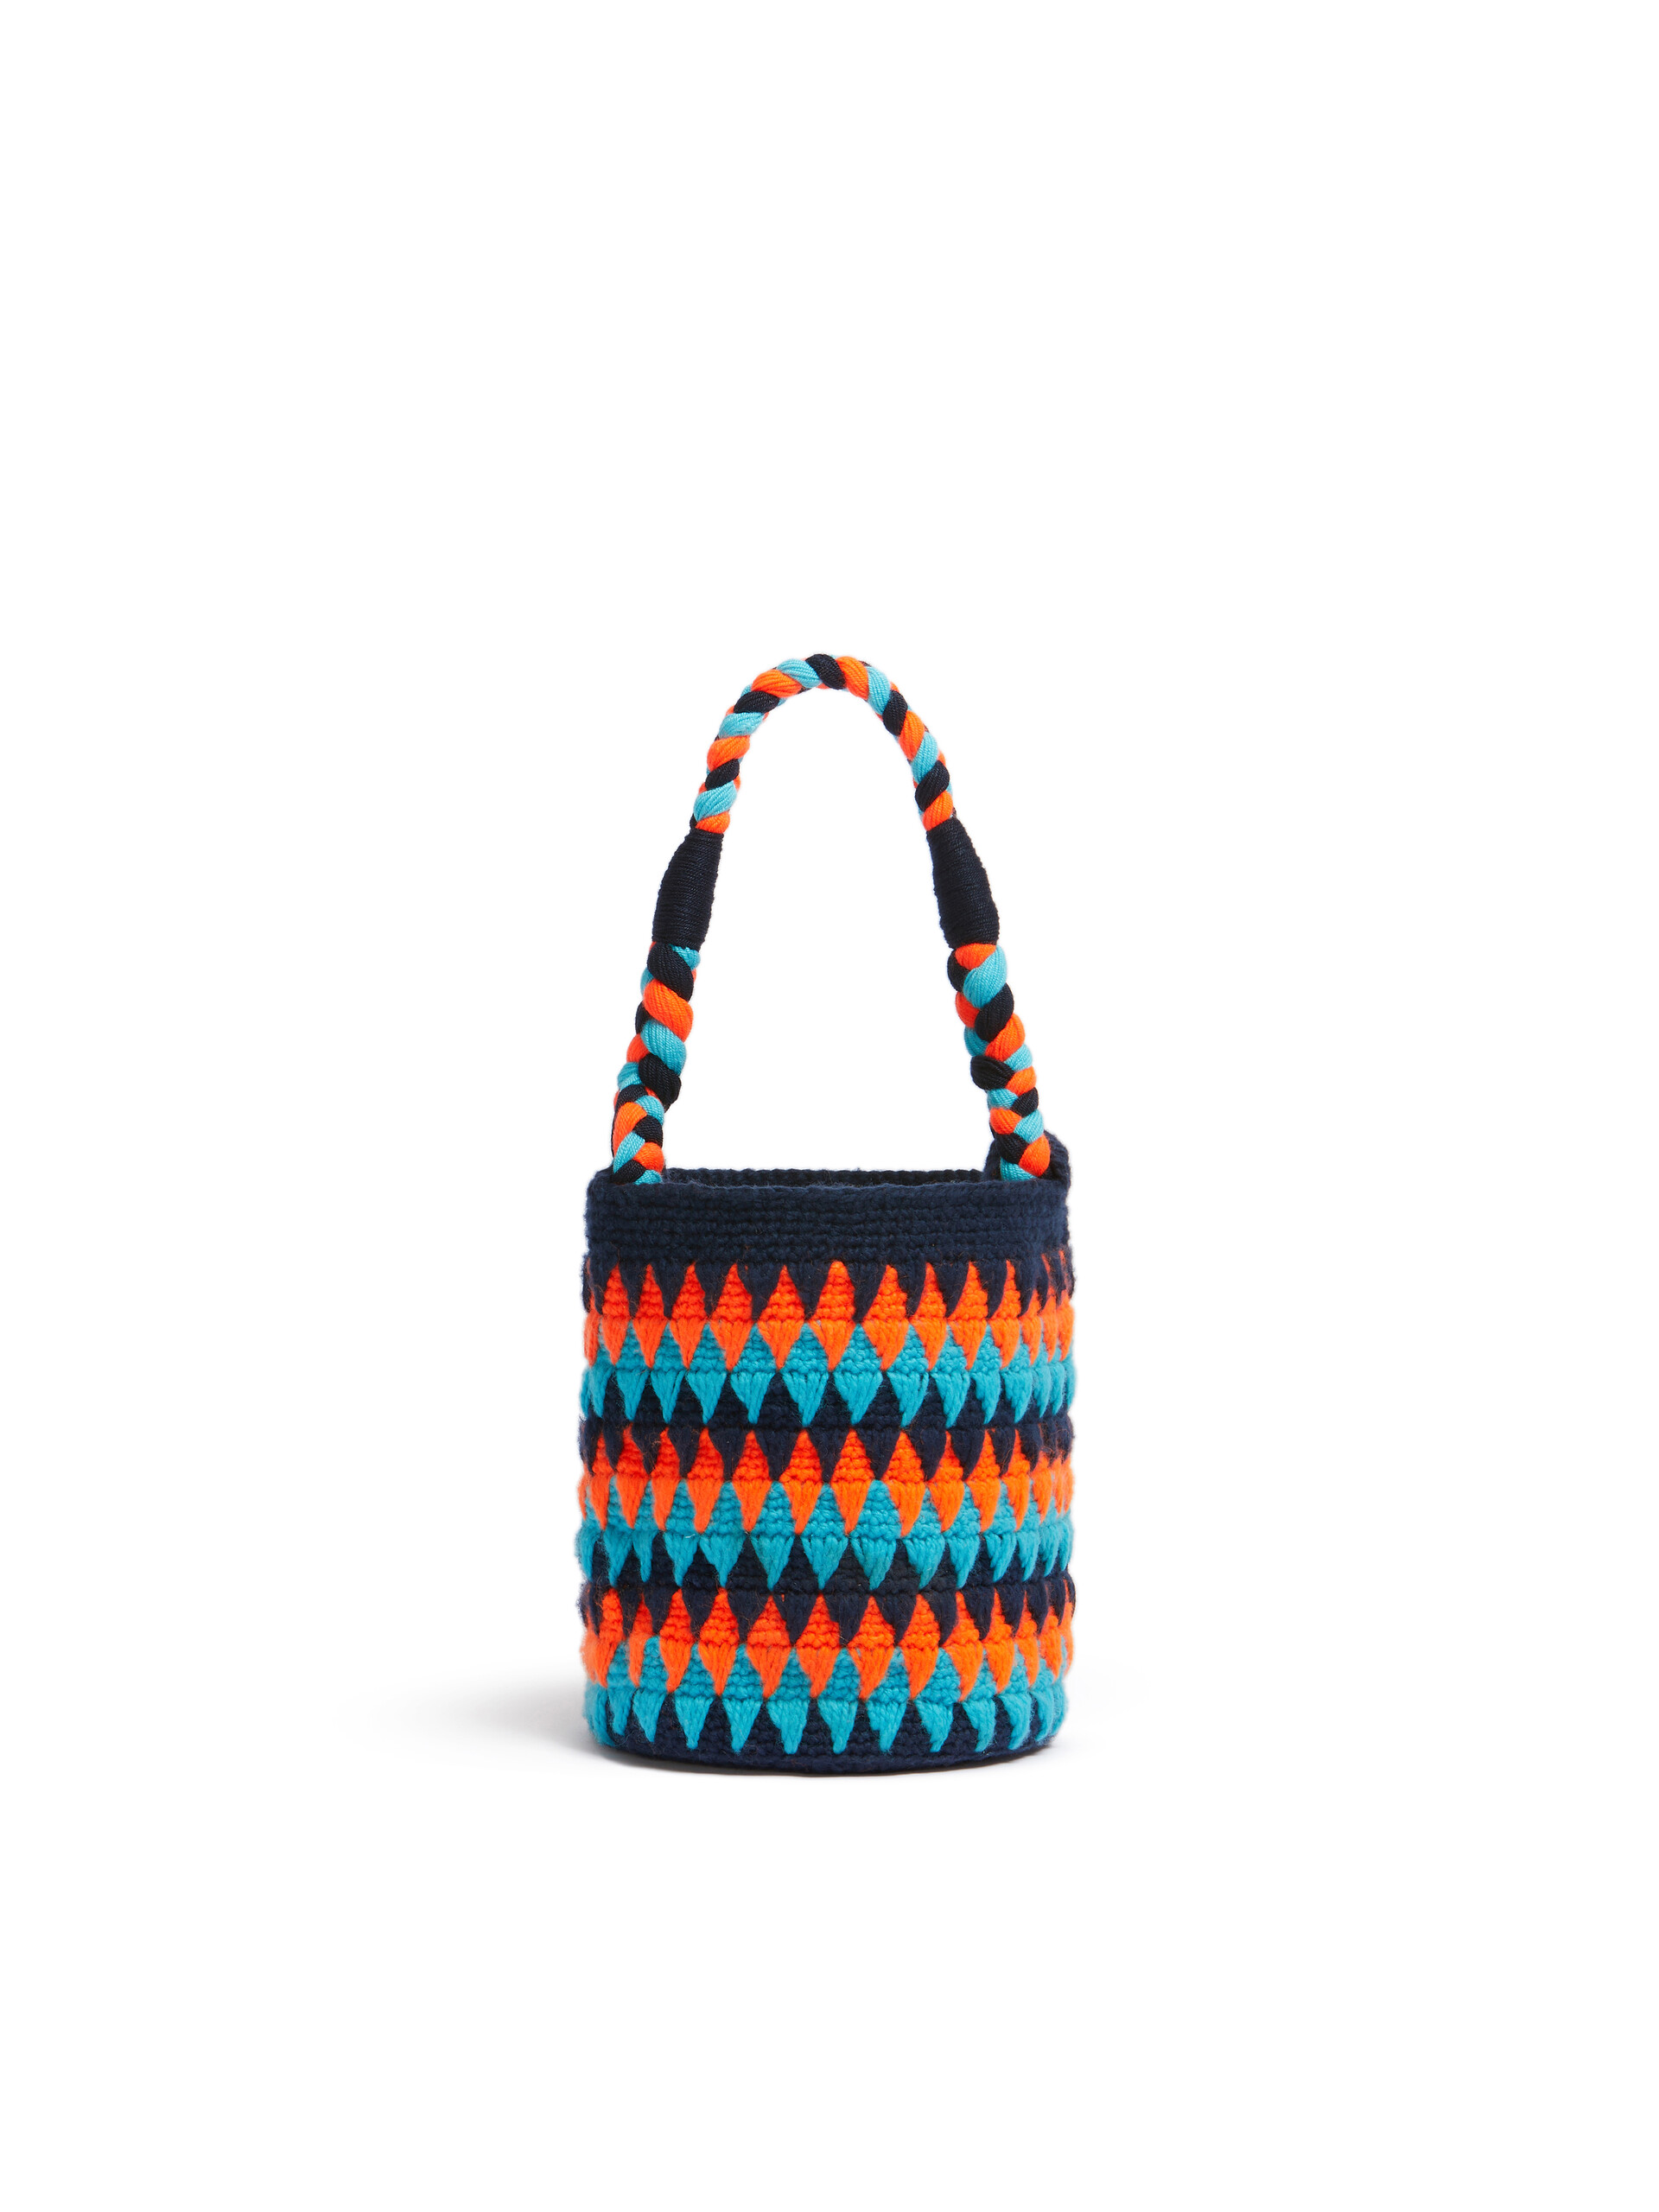 Orange And Blue Crochet Marni Market Chessboard Bag - Shopping Bags - Image 3